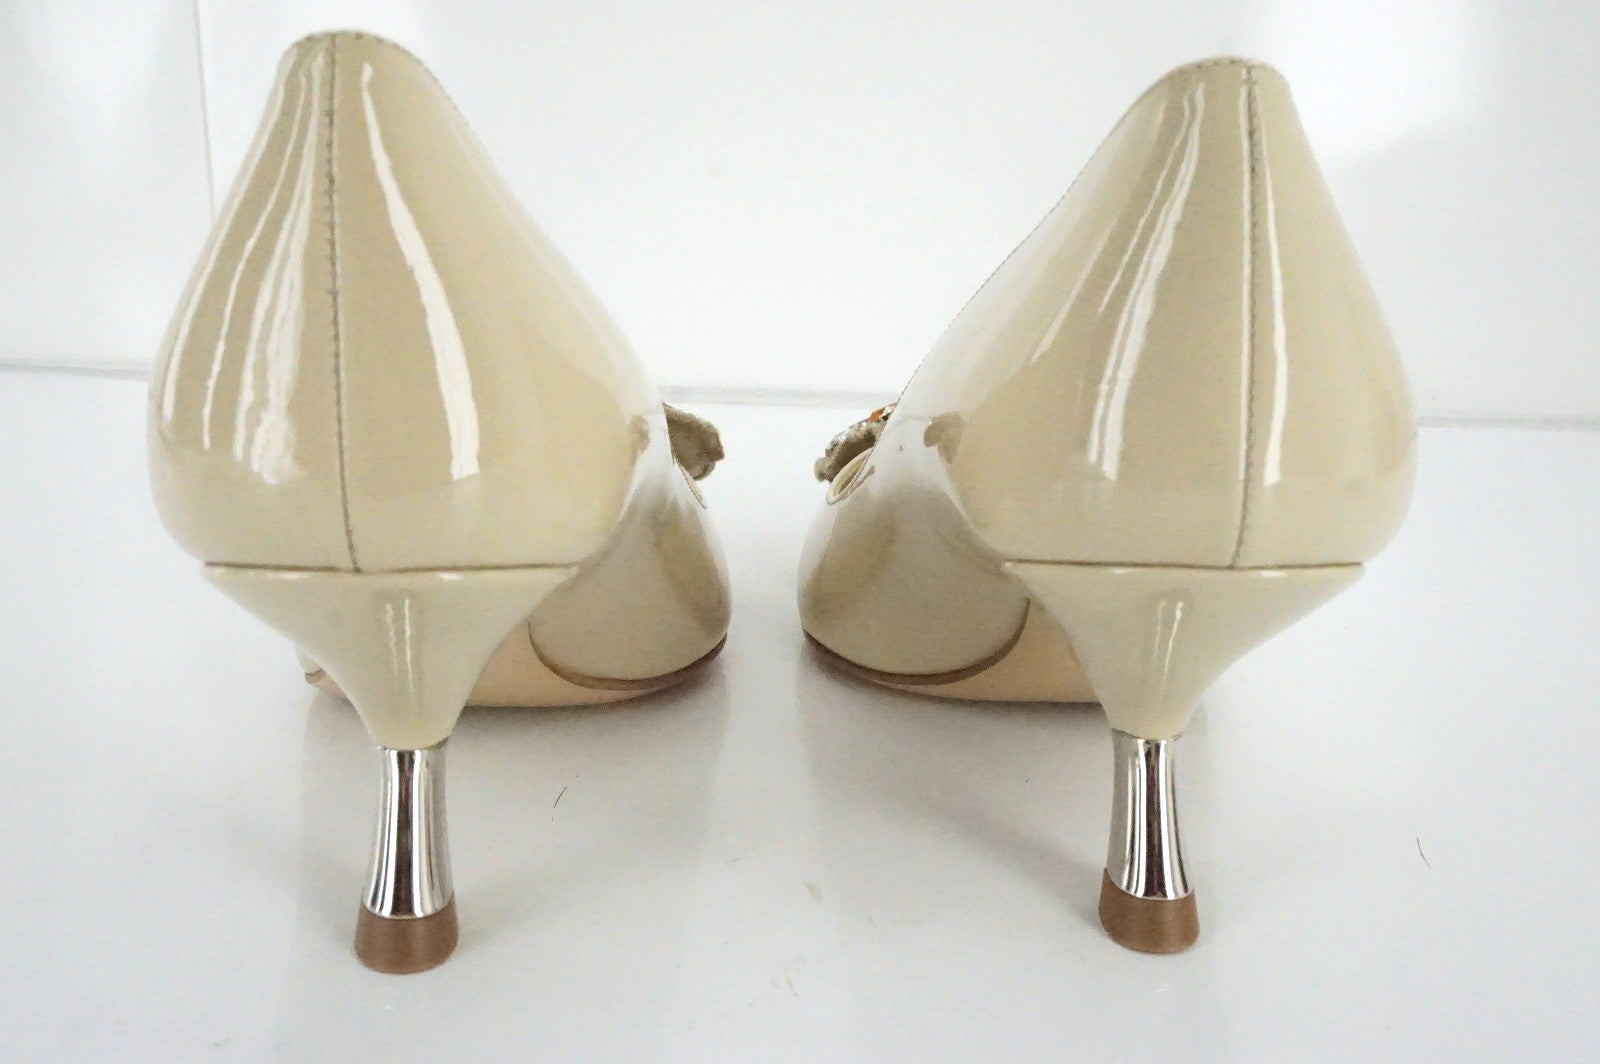 Prada Nude Patent Beaded Broach Mid Heel Pointy Toe Pumps Size 35 NIB $970 Sz